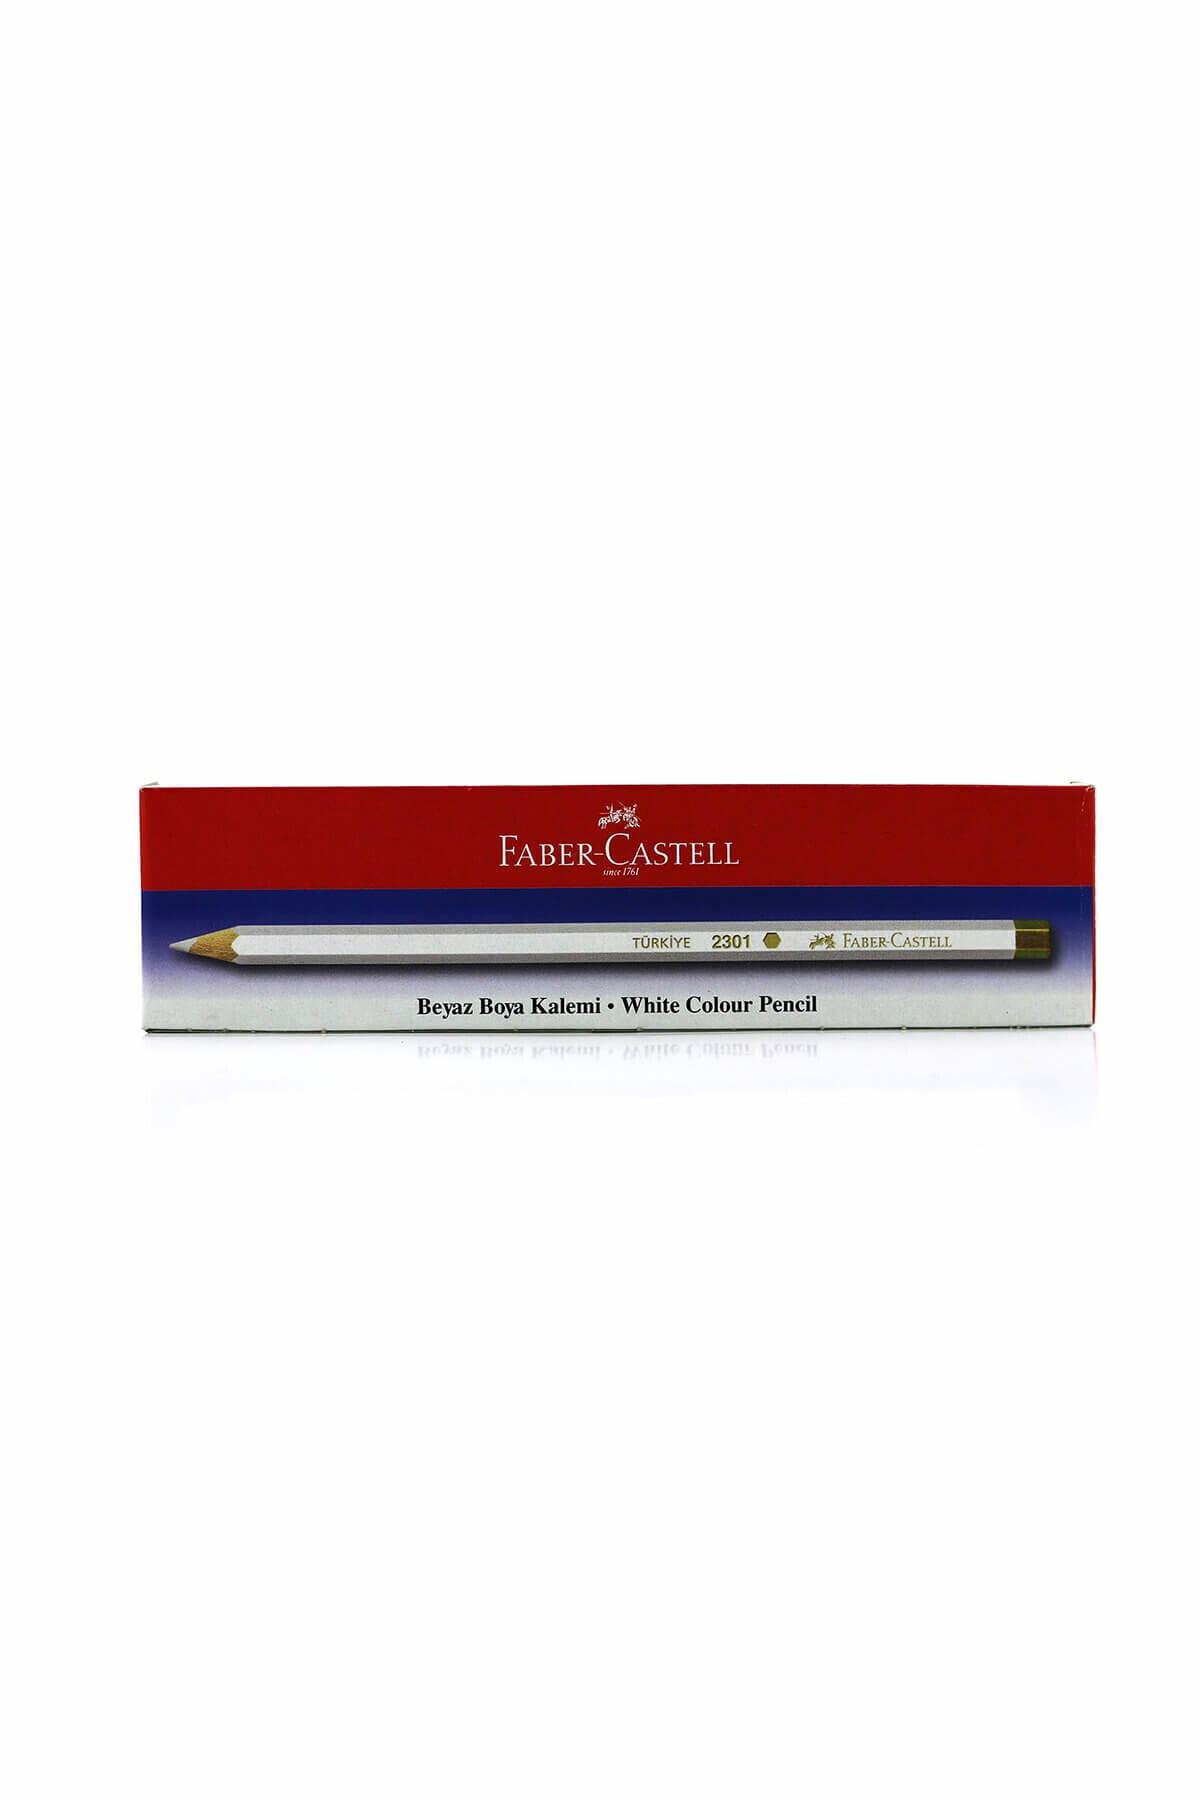 Faber Castell Faber Beyaz Kopya Kalemi 2301 517523010